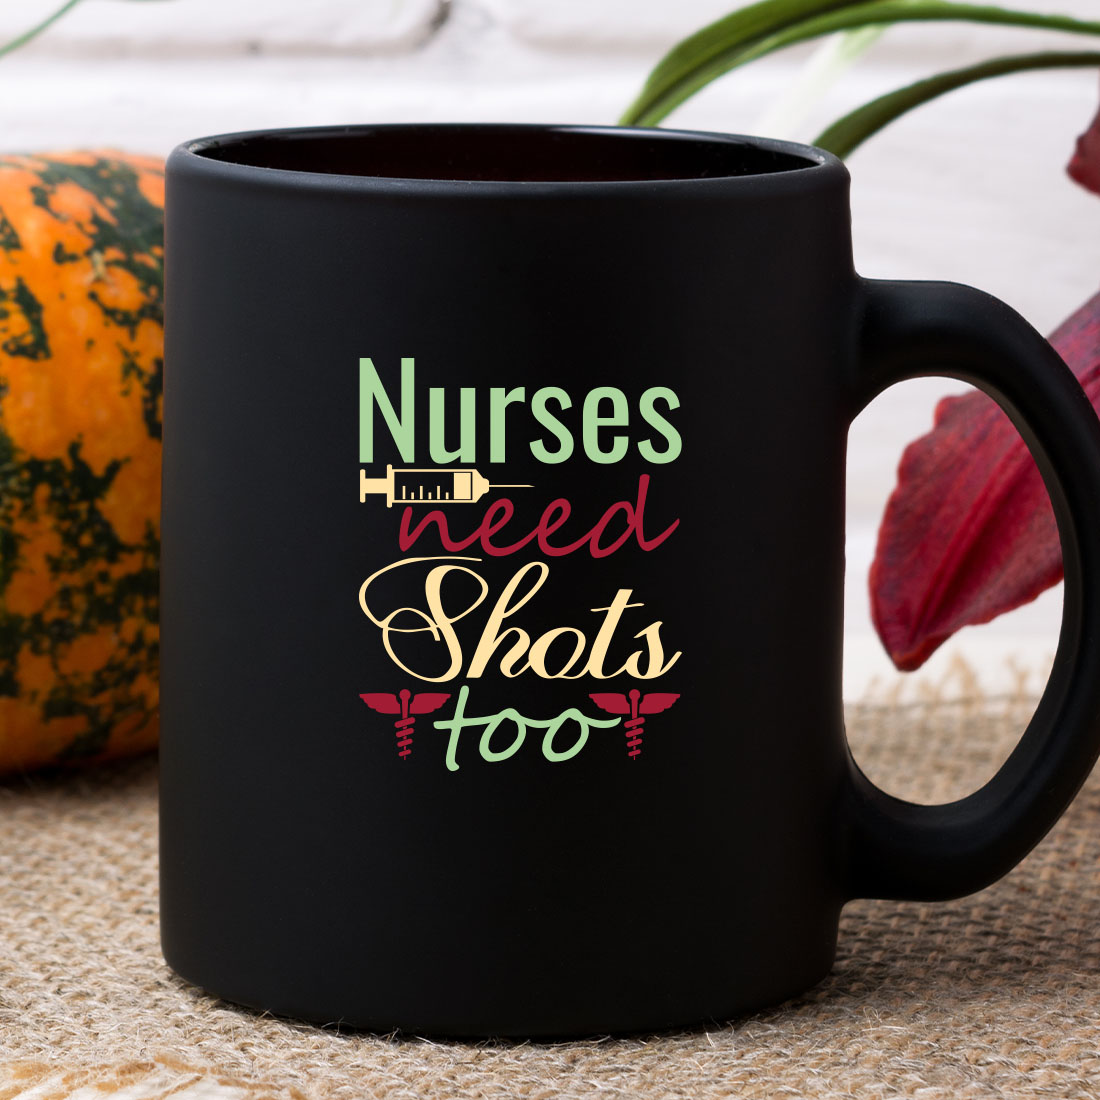 Black coffee mug that says nurses need shots too.